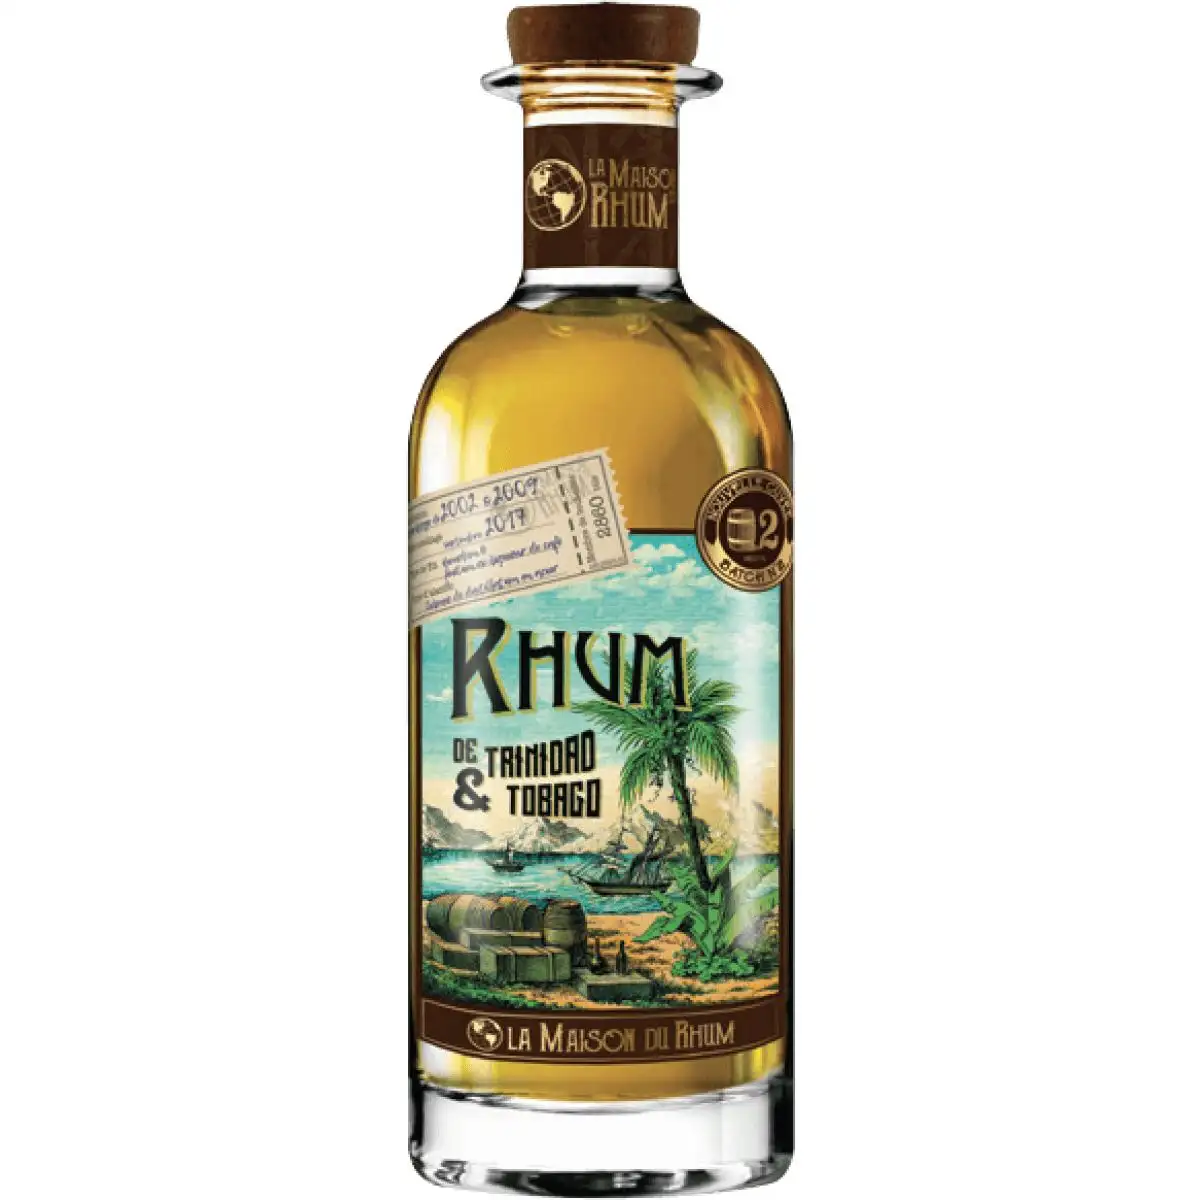 Image of the front of the bottle of the rum La Maison du Rhum Trinidad & Tobago #2